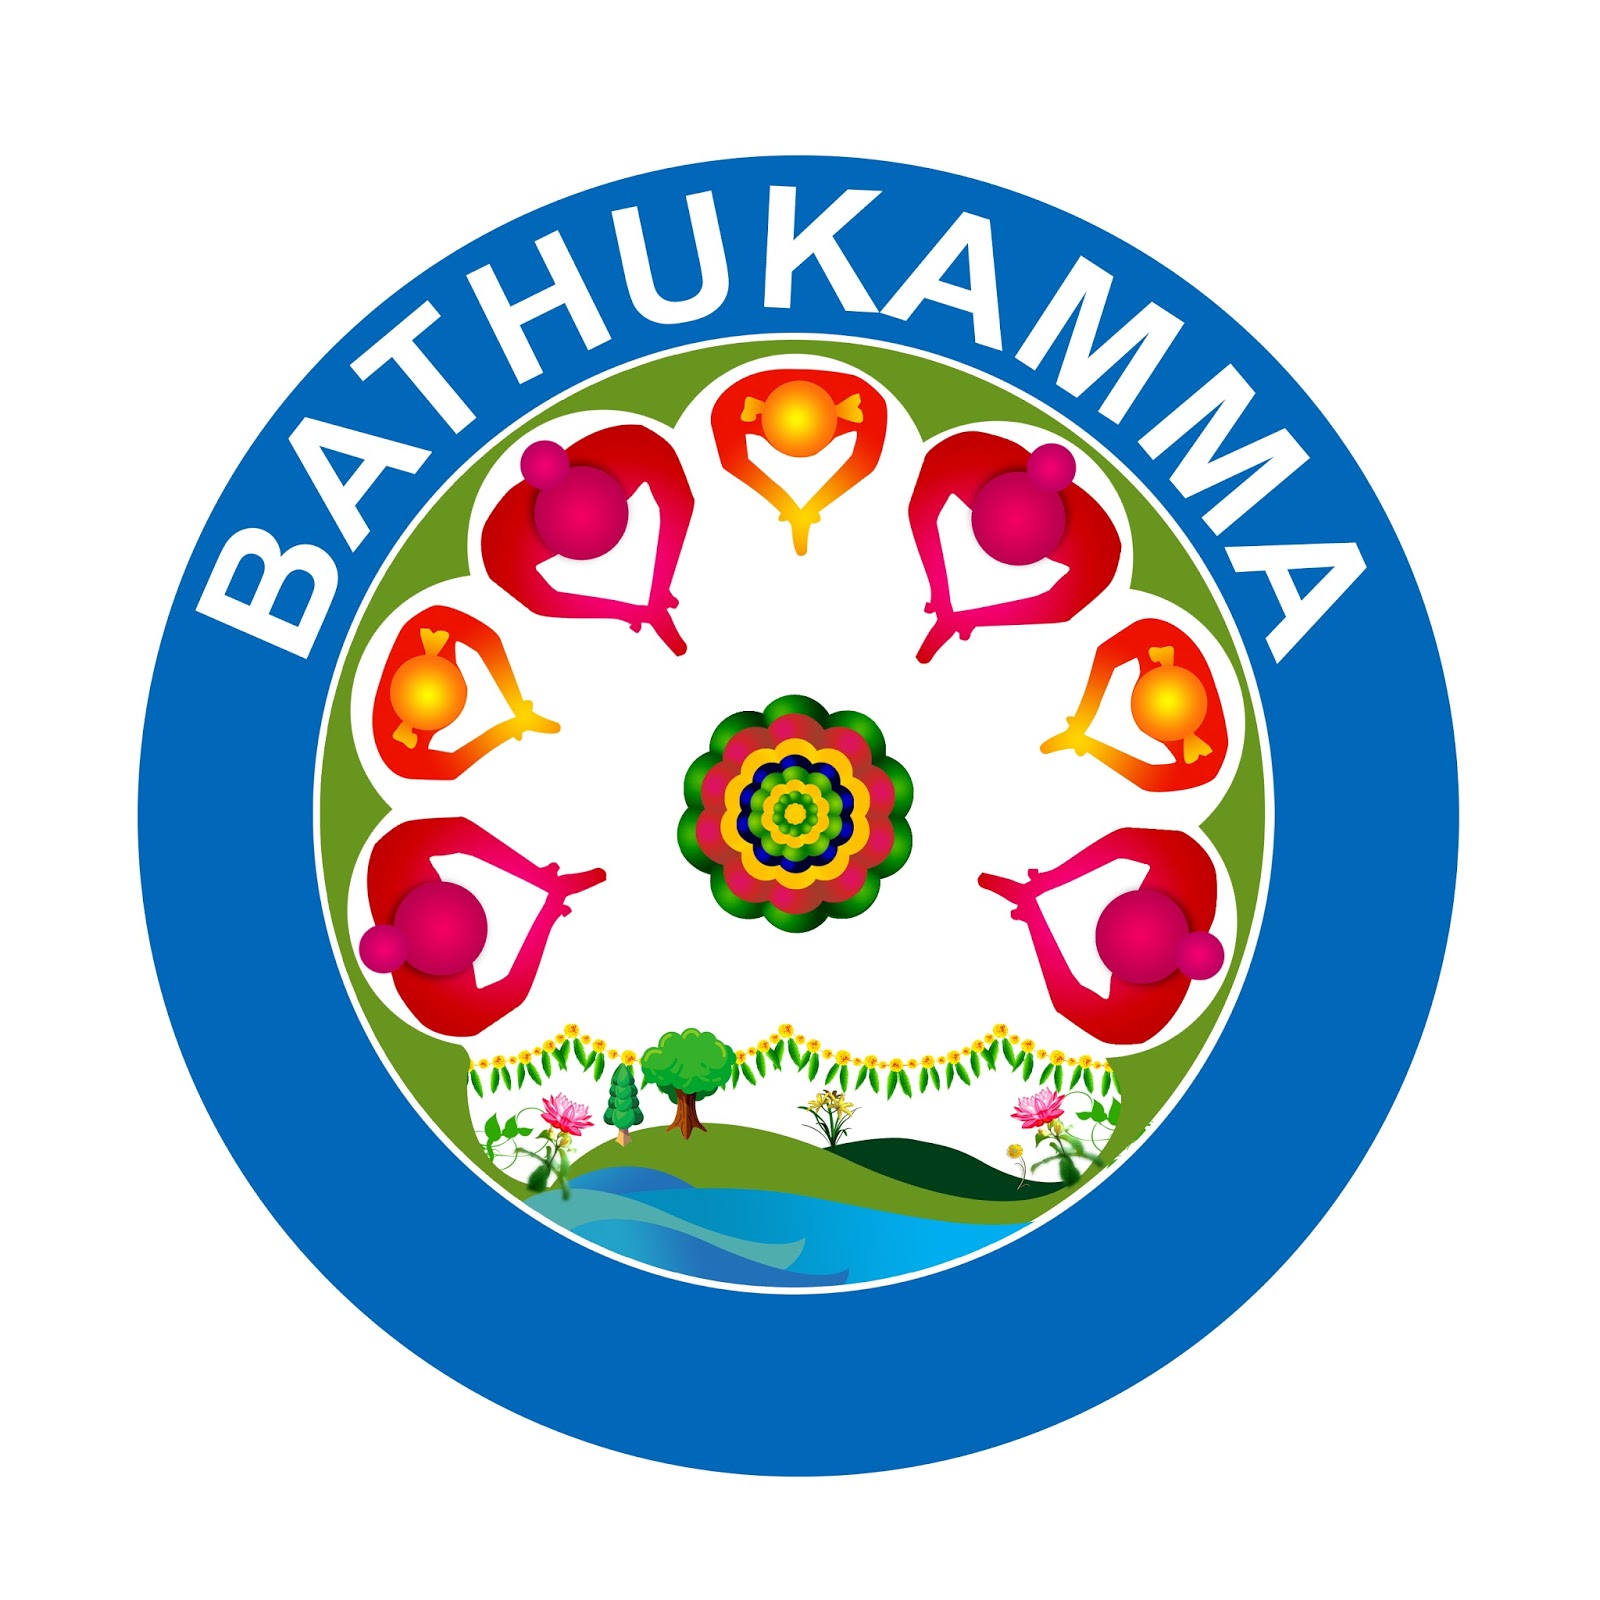 bathukamma festival new logo on the fesitival of bathukamma vedukalu |  naveengfx